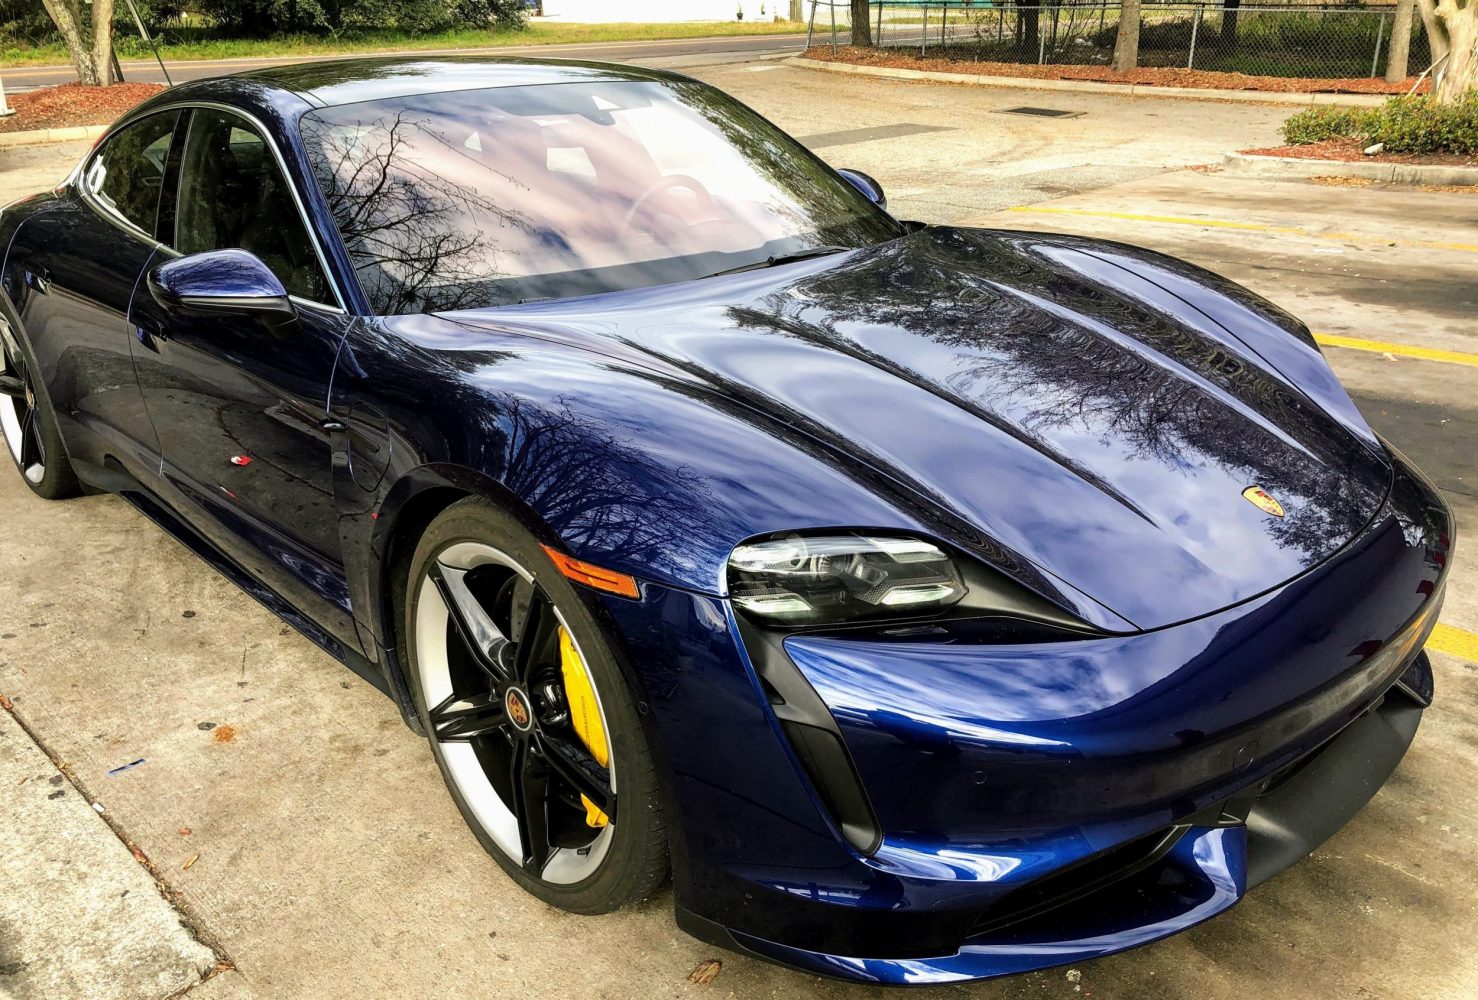 https://electrek.co/wp-content/uploads/sites/3/2020/02/Porsche-Taycan-Turbo-Blue.jpg?quality=82&strip=all&w=1478